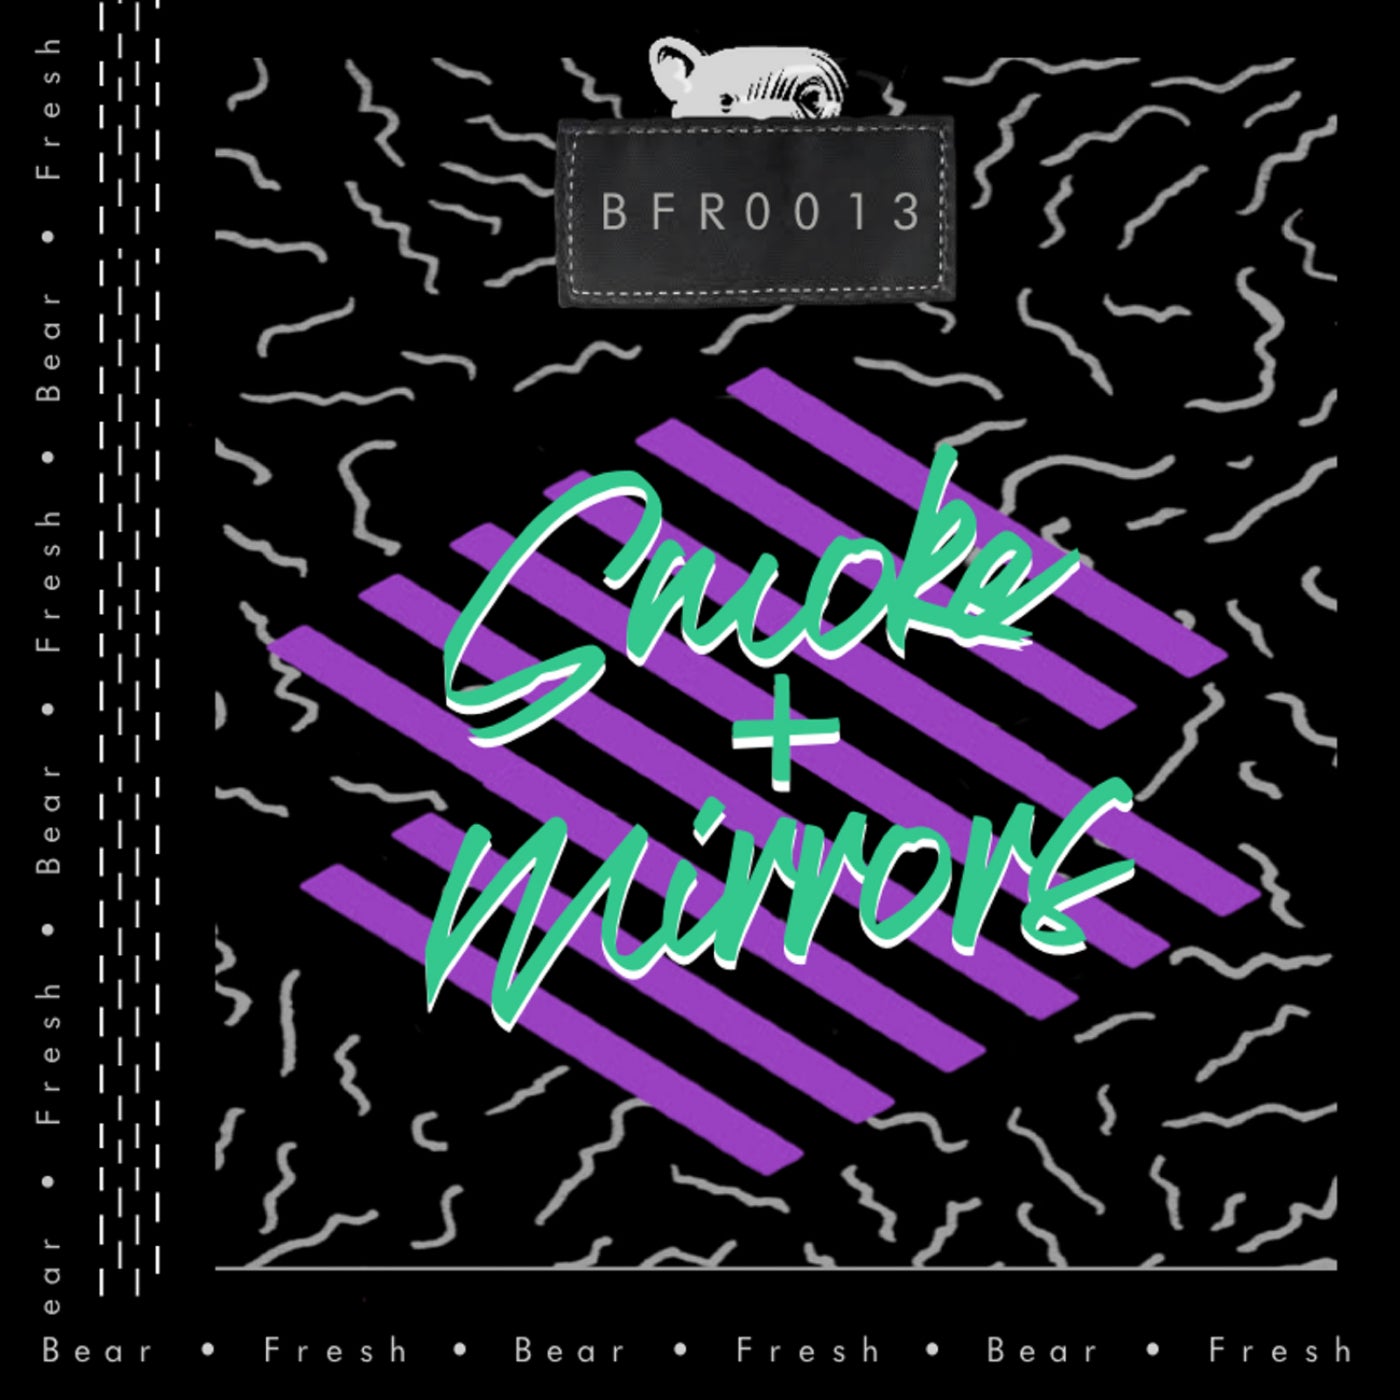 Smoke + Mirrors EP